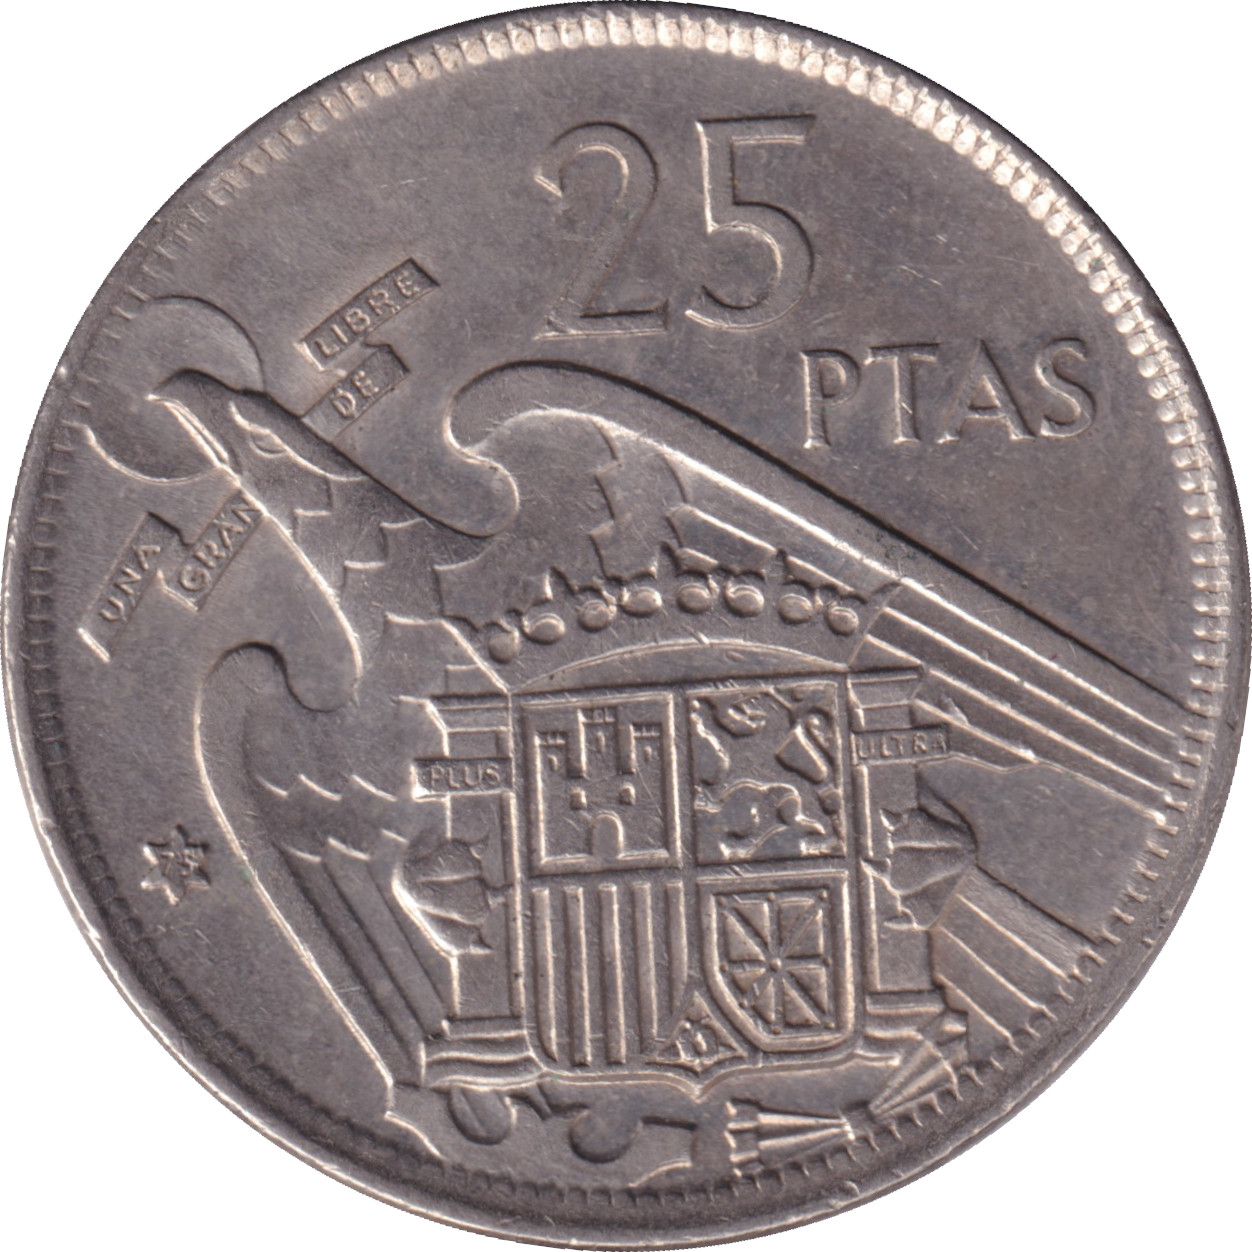 25 pesetas - Franco